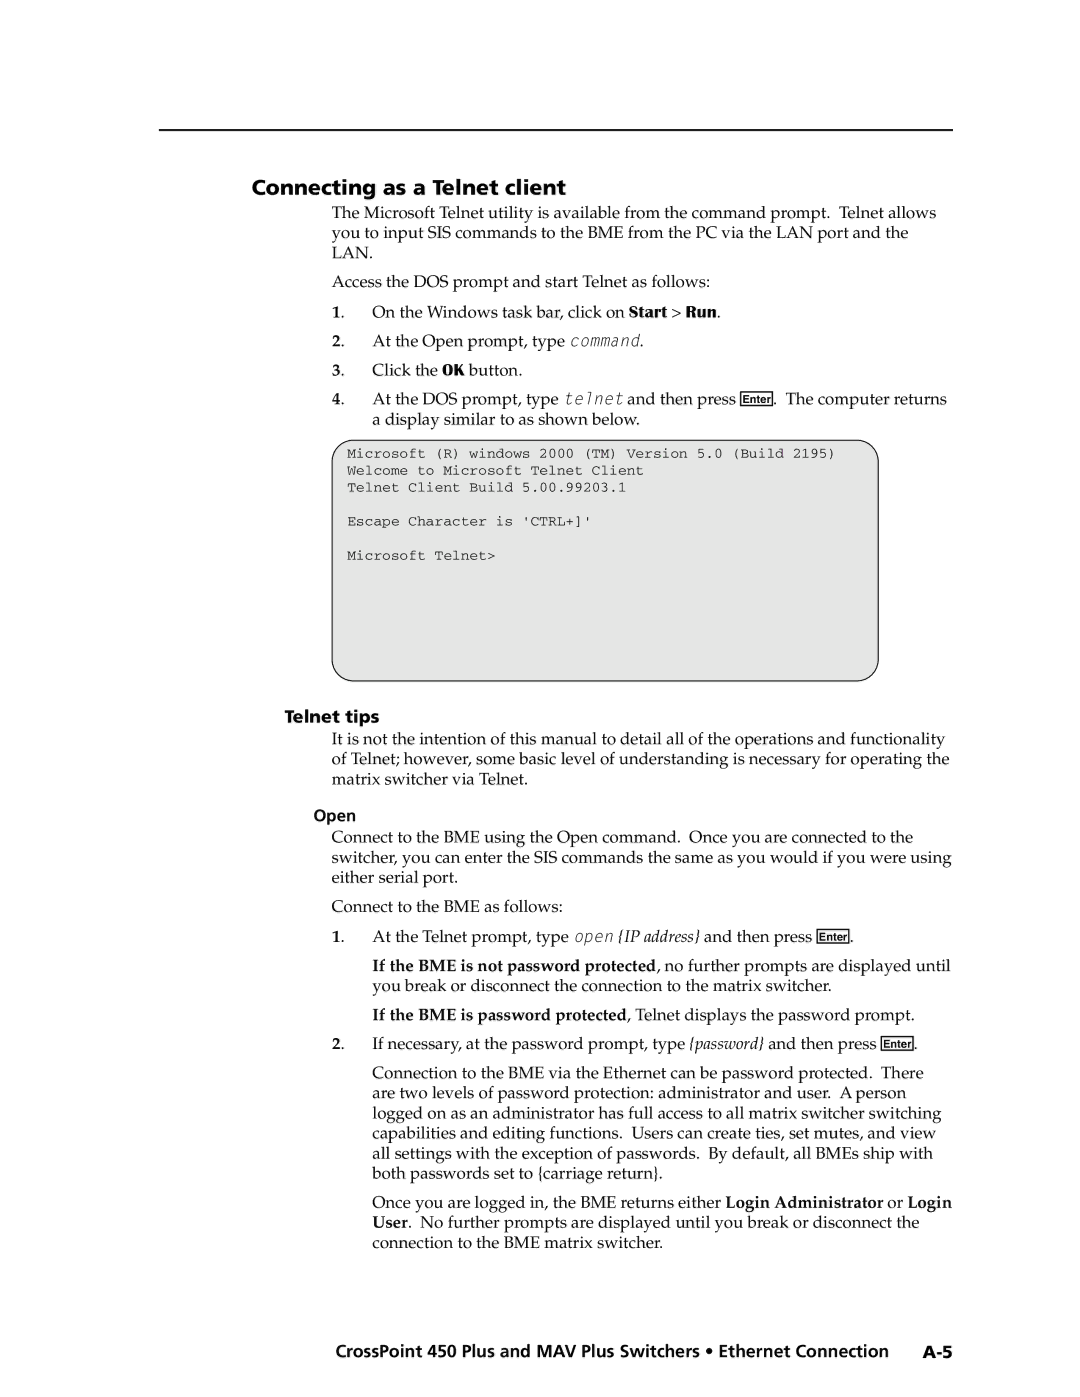 Extron electronic MAV Plus Series manual Connecting as a Telnet client, Telnet tips, Open 